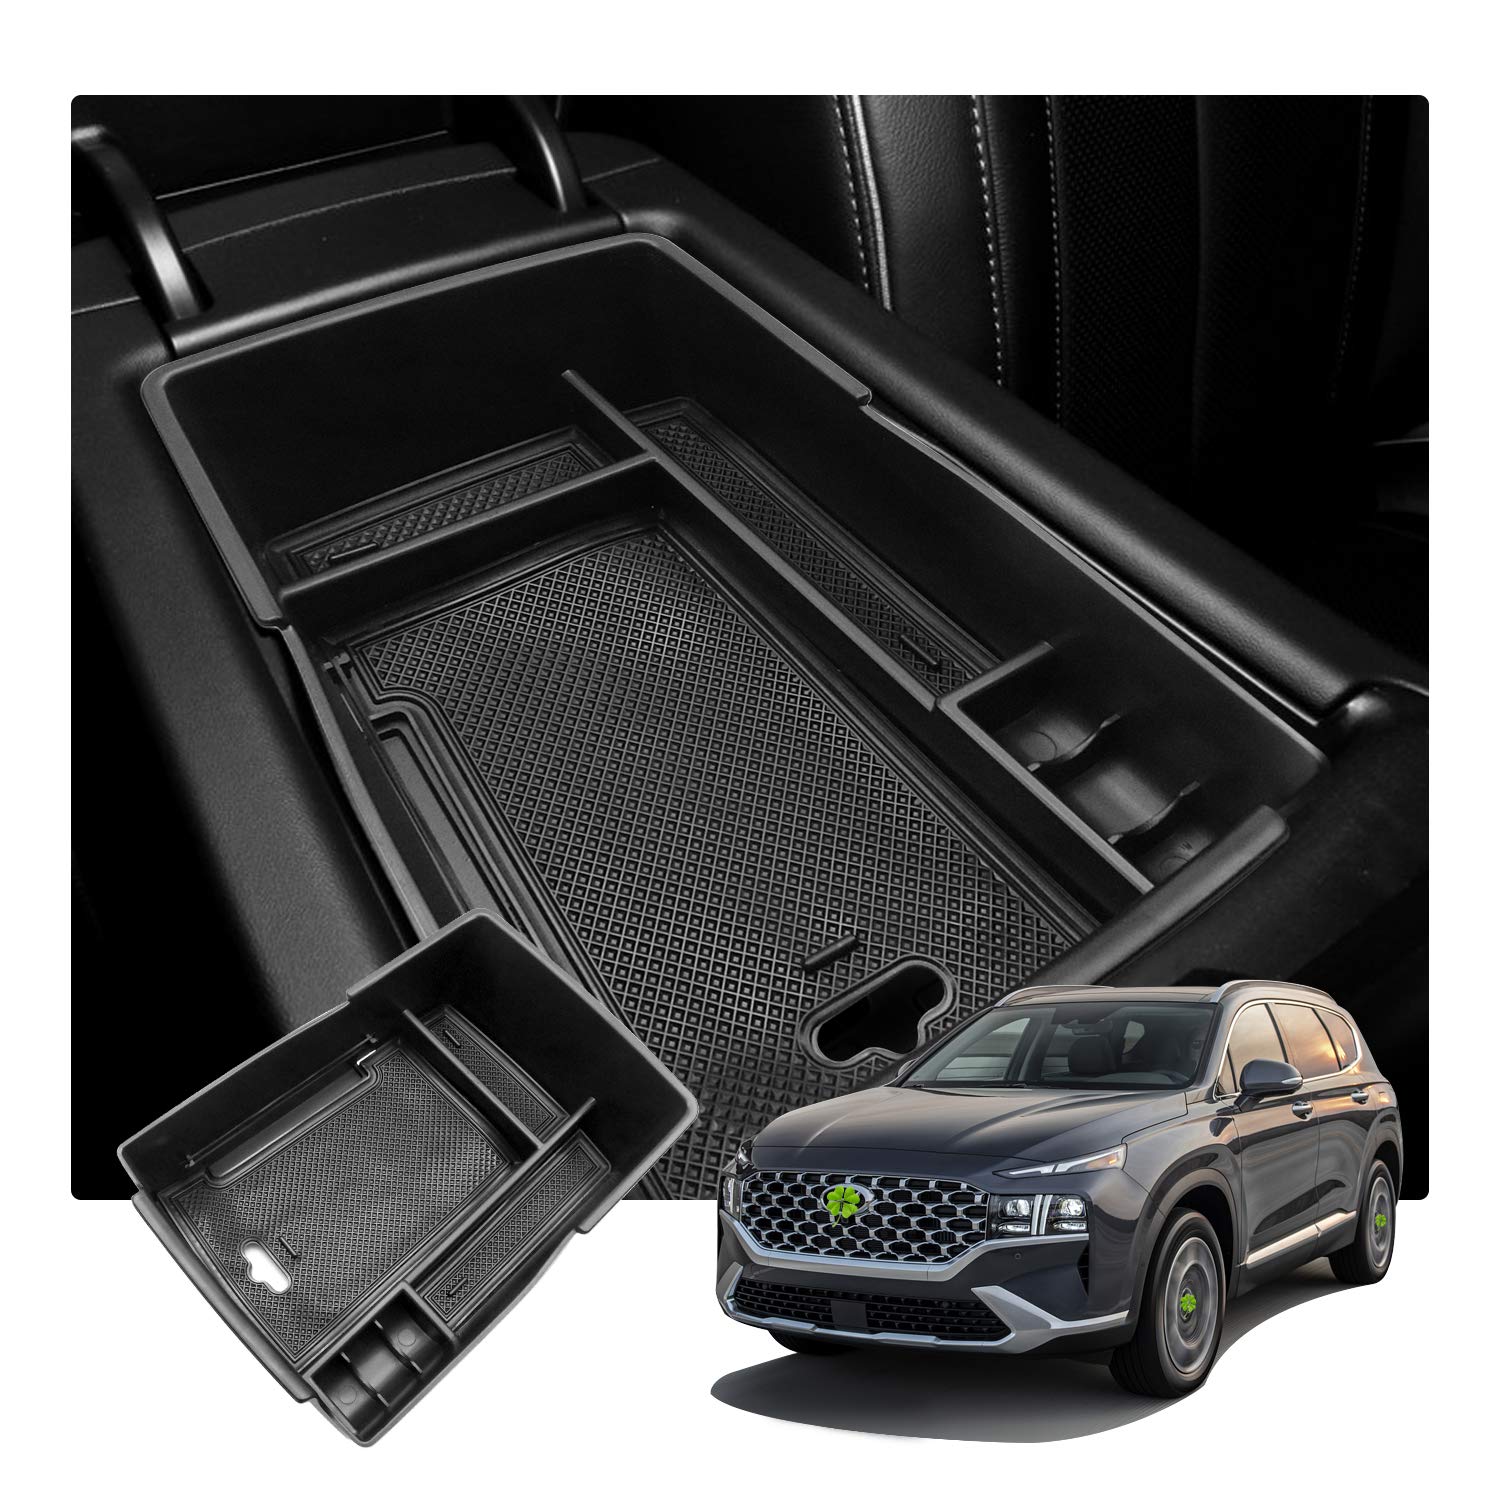 Hyundai Santa Fe Center Console Organizer Tray 2020+ - LFOTPP Car Accessories